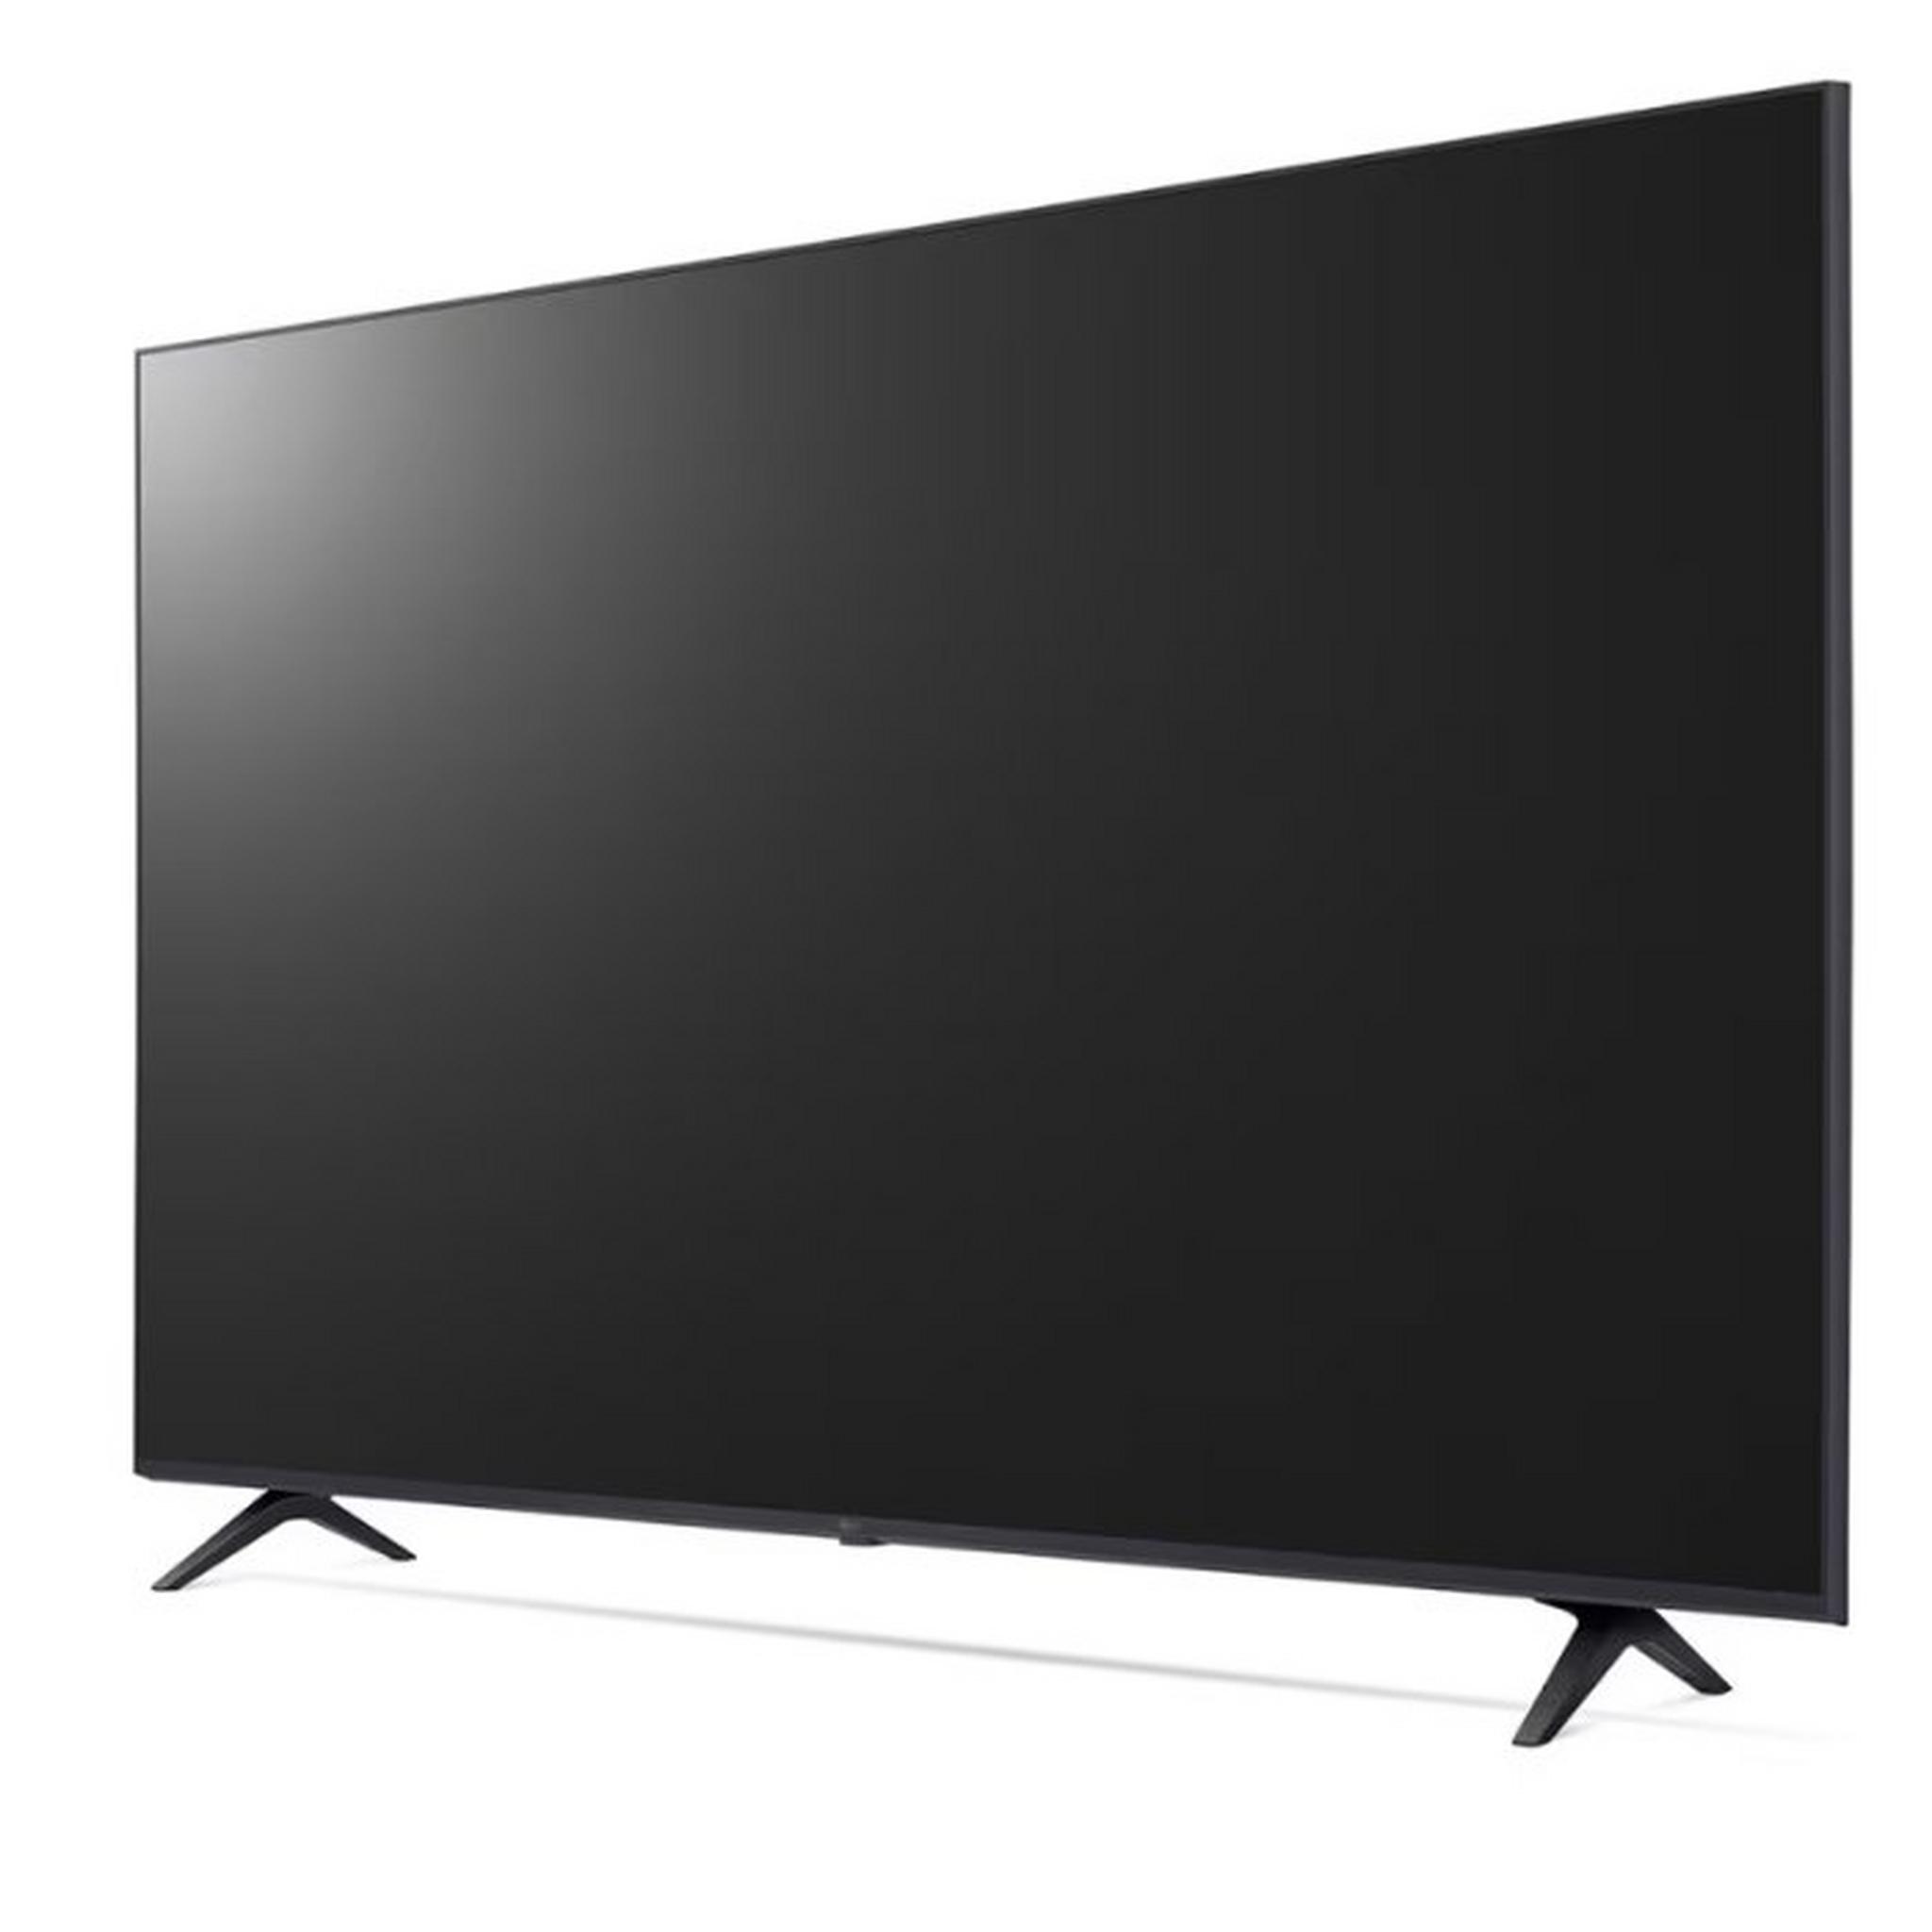 LG 65-inch Smart UHD LED TV, 65UR80006LJ – Black